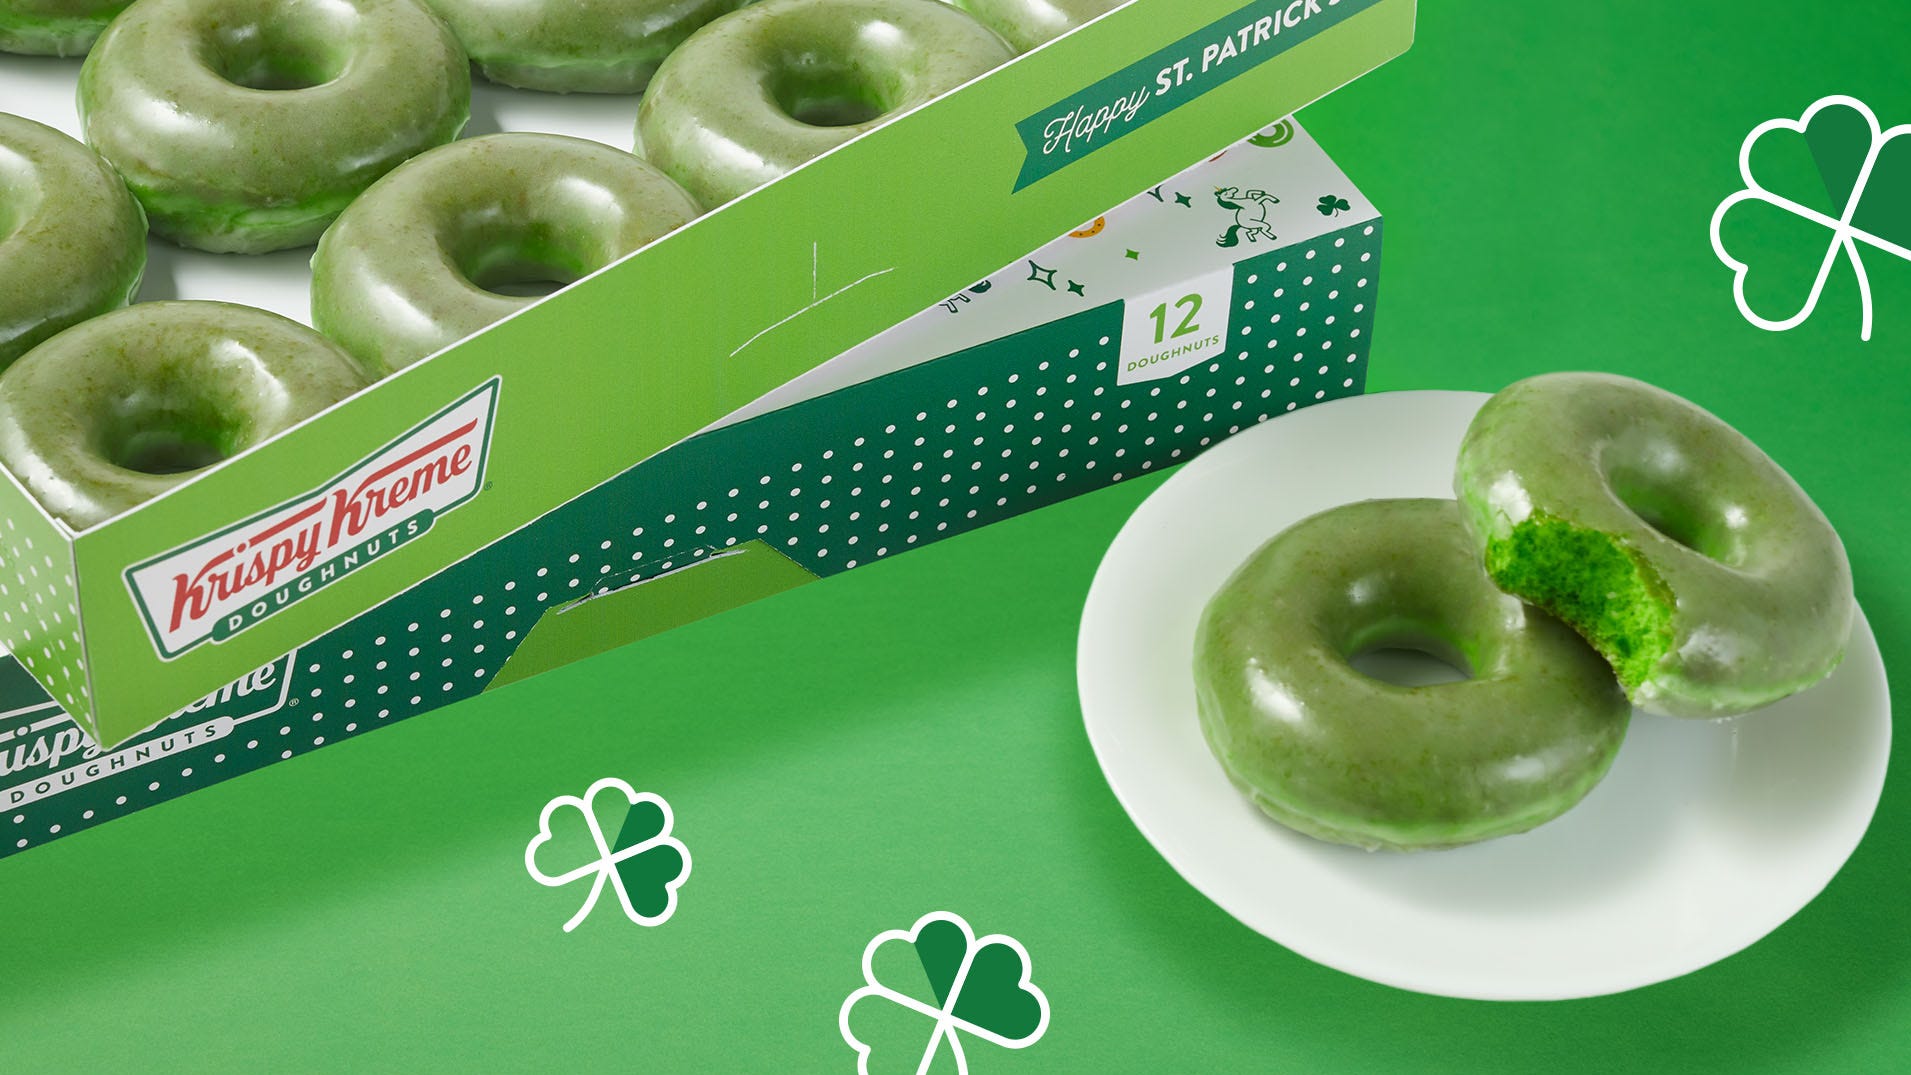 Stimulus Check Free Krispy Kreme Donuts Among St Patrick S Day Deals